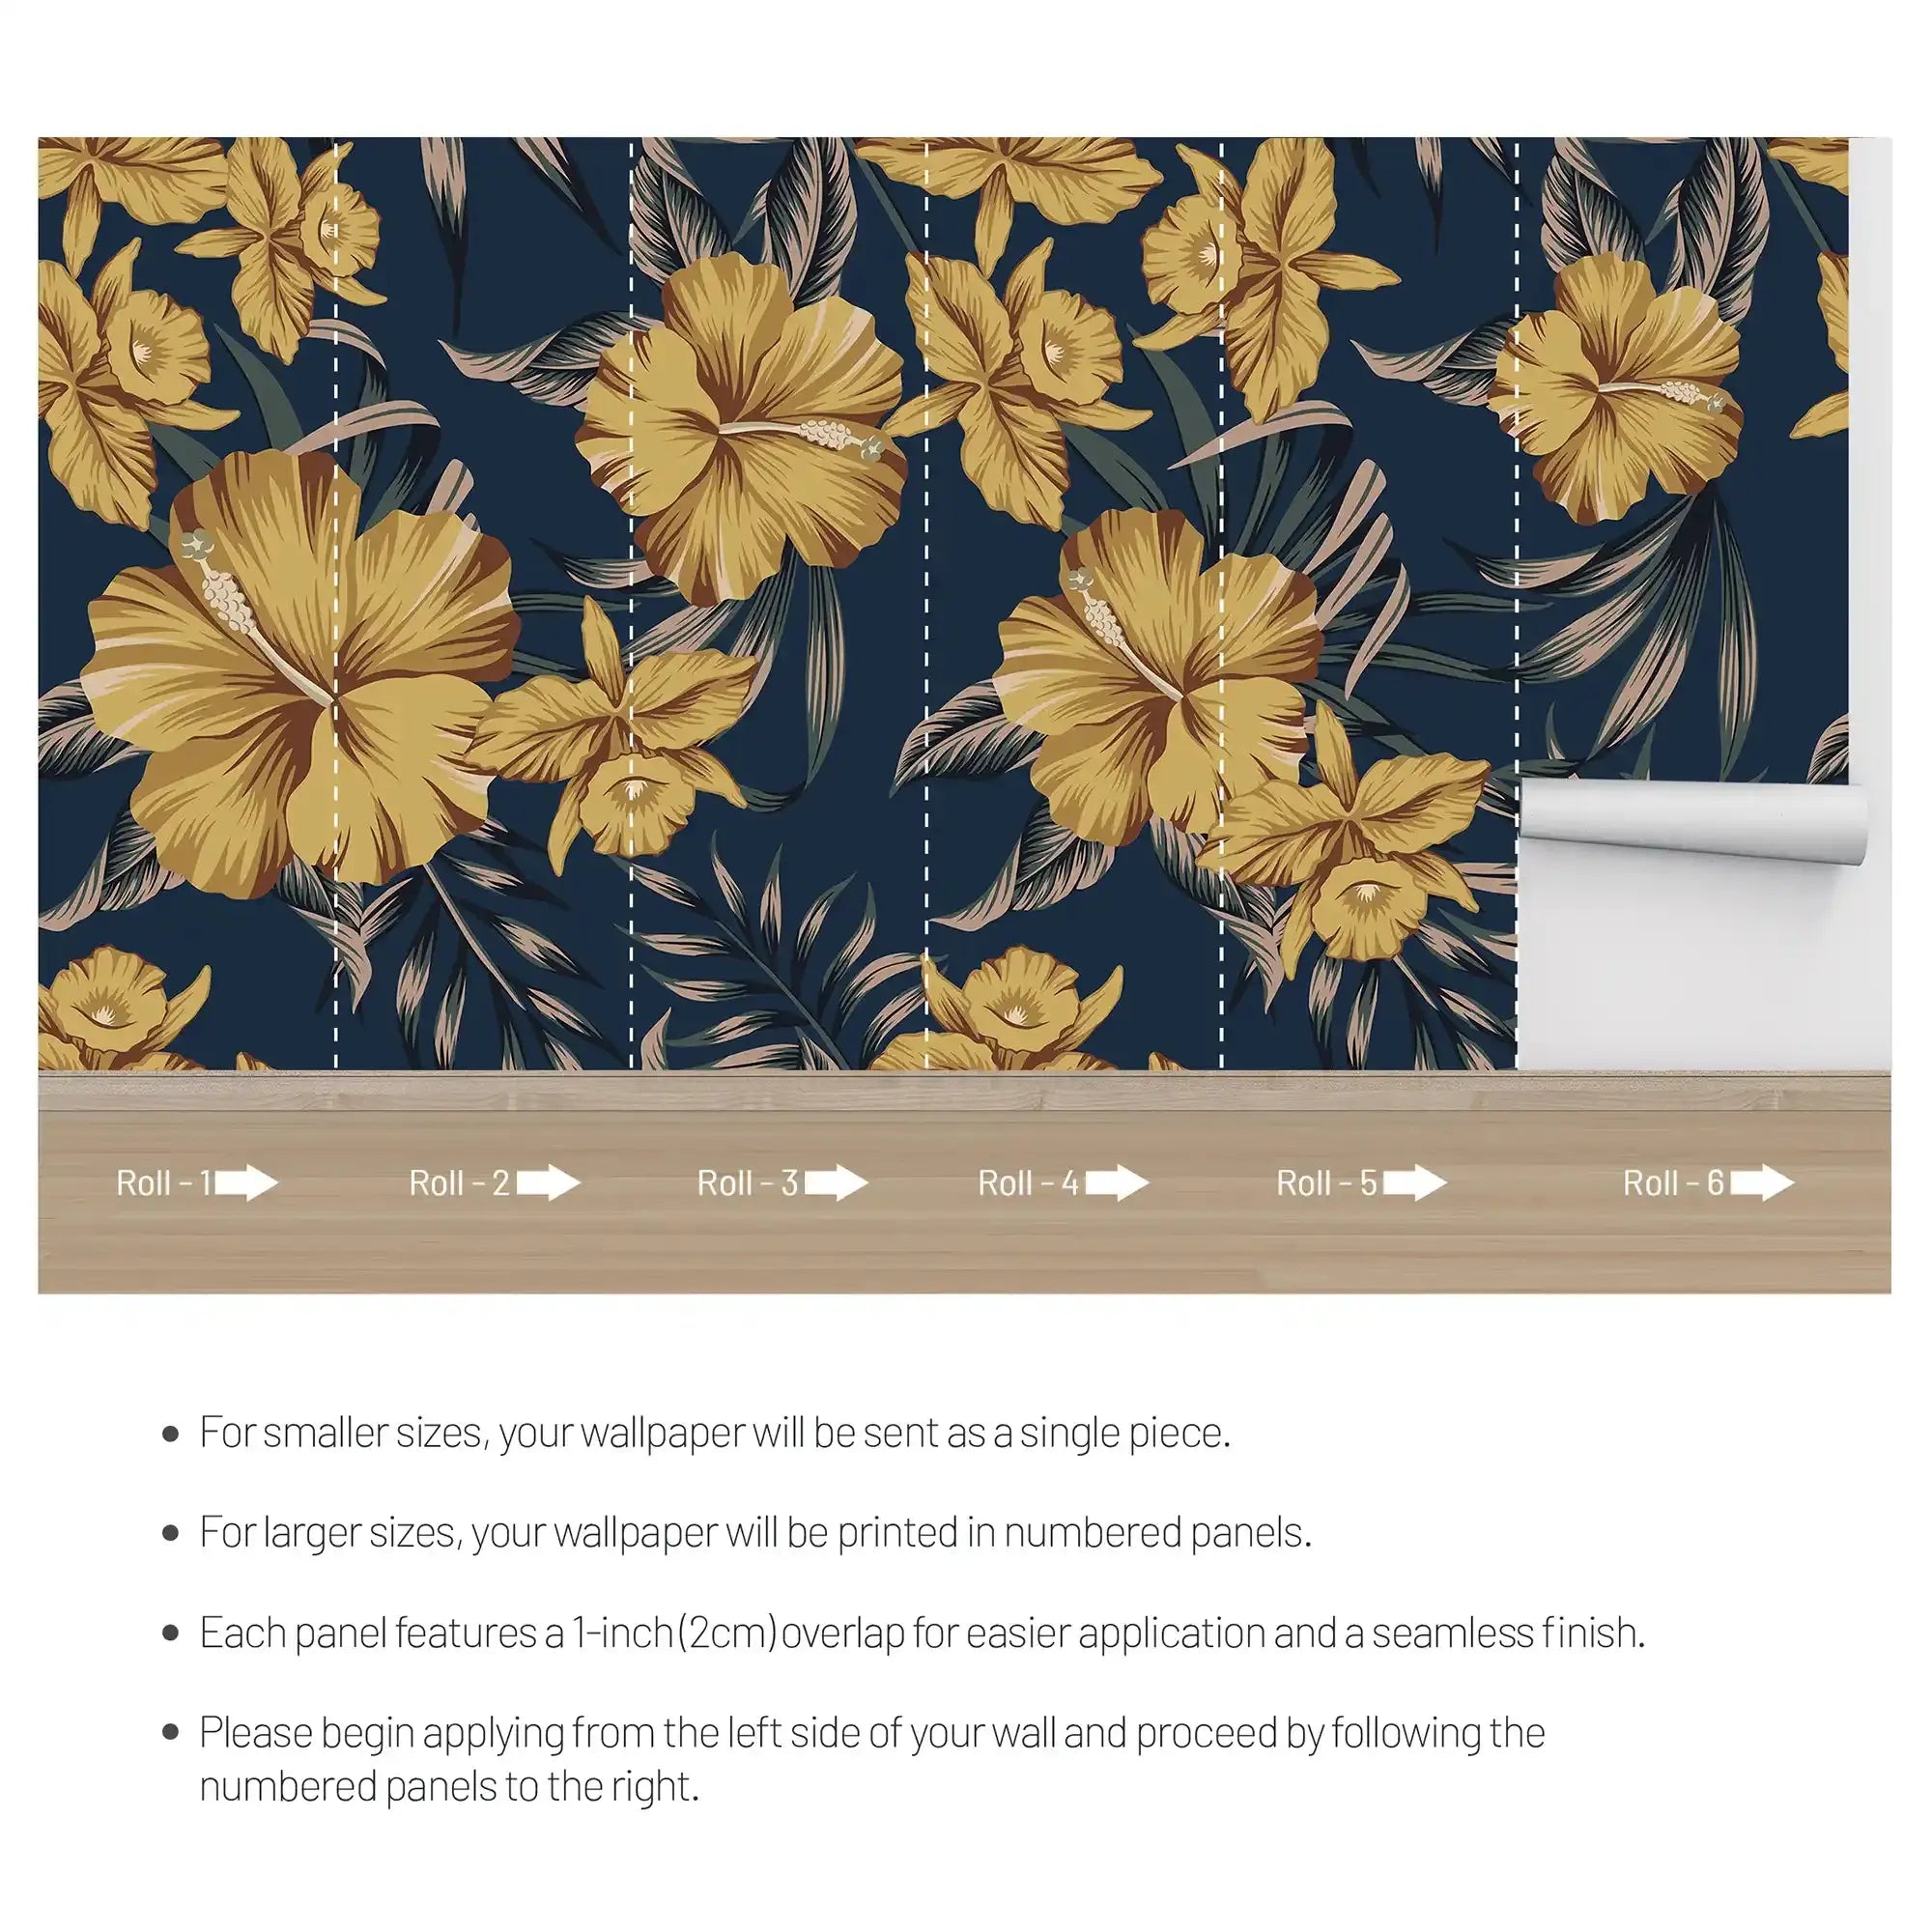 3102-A / Botanical Hibiscus Peel and Stick Wallpaper - Vibrant Yellow on Ocean Blue - DIY Wall Decor - Artevella